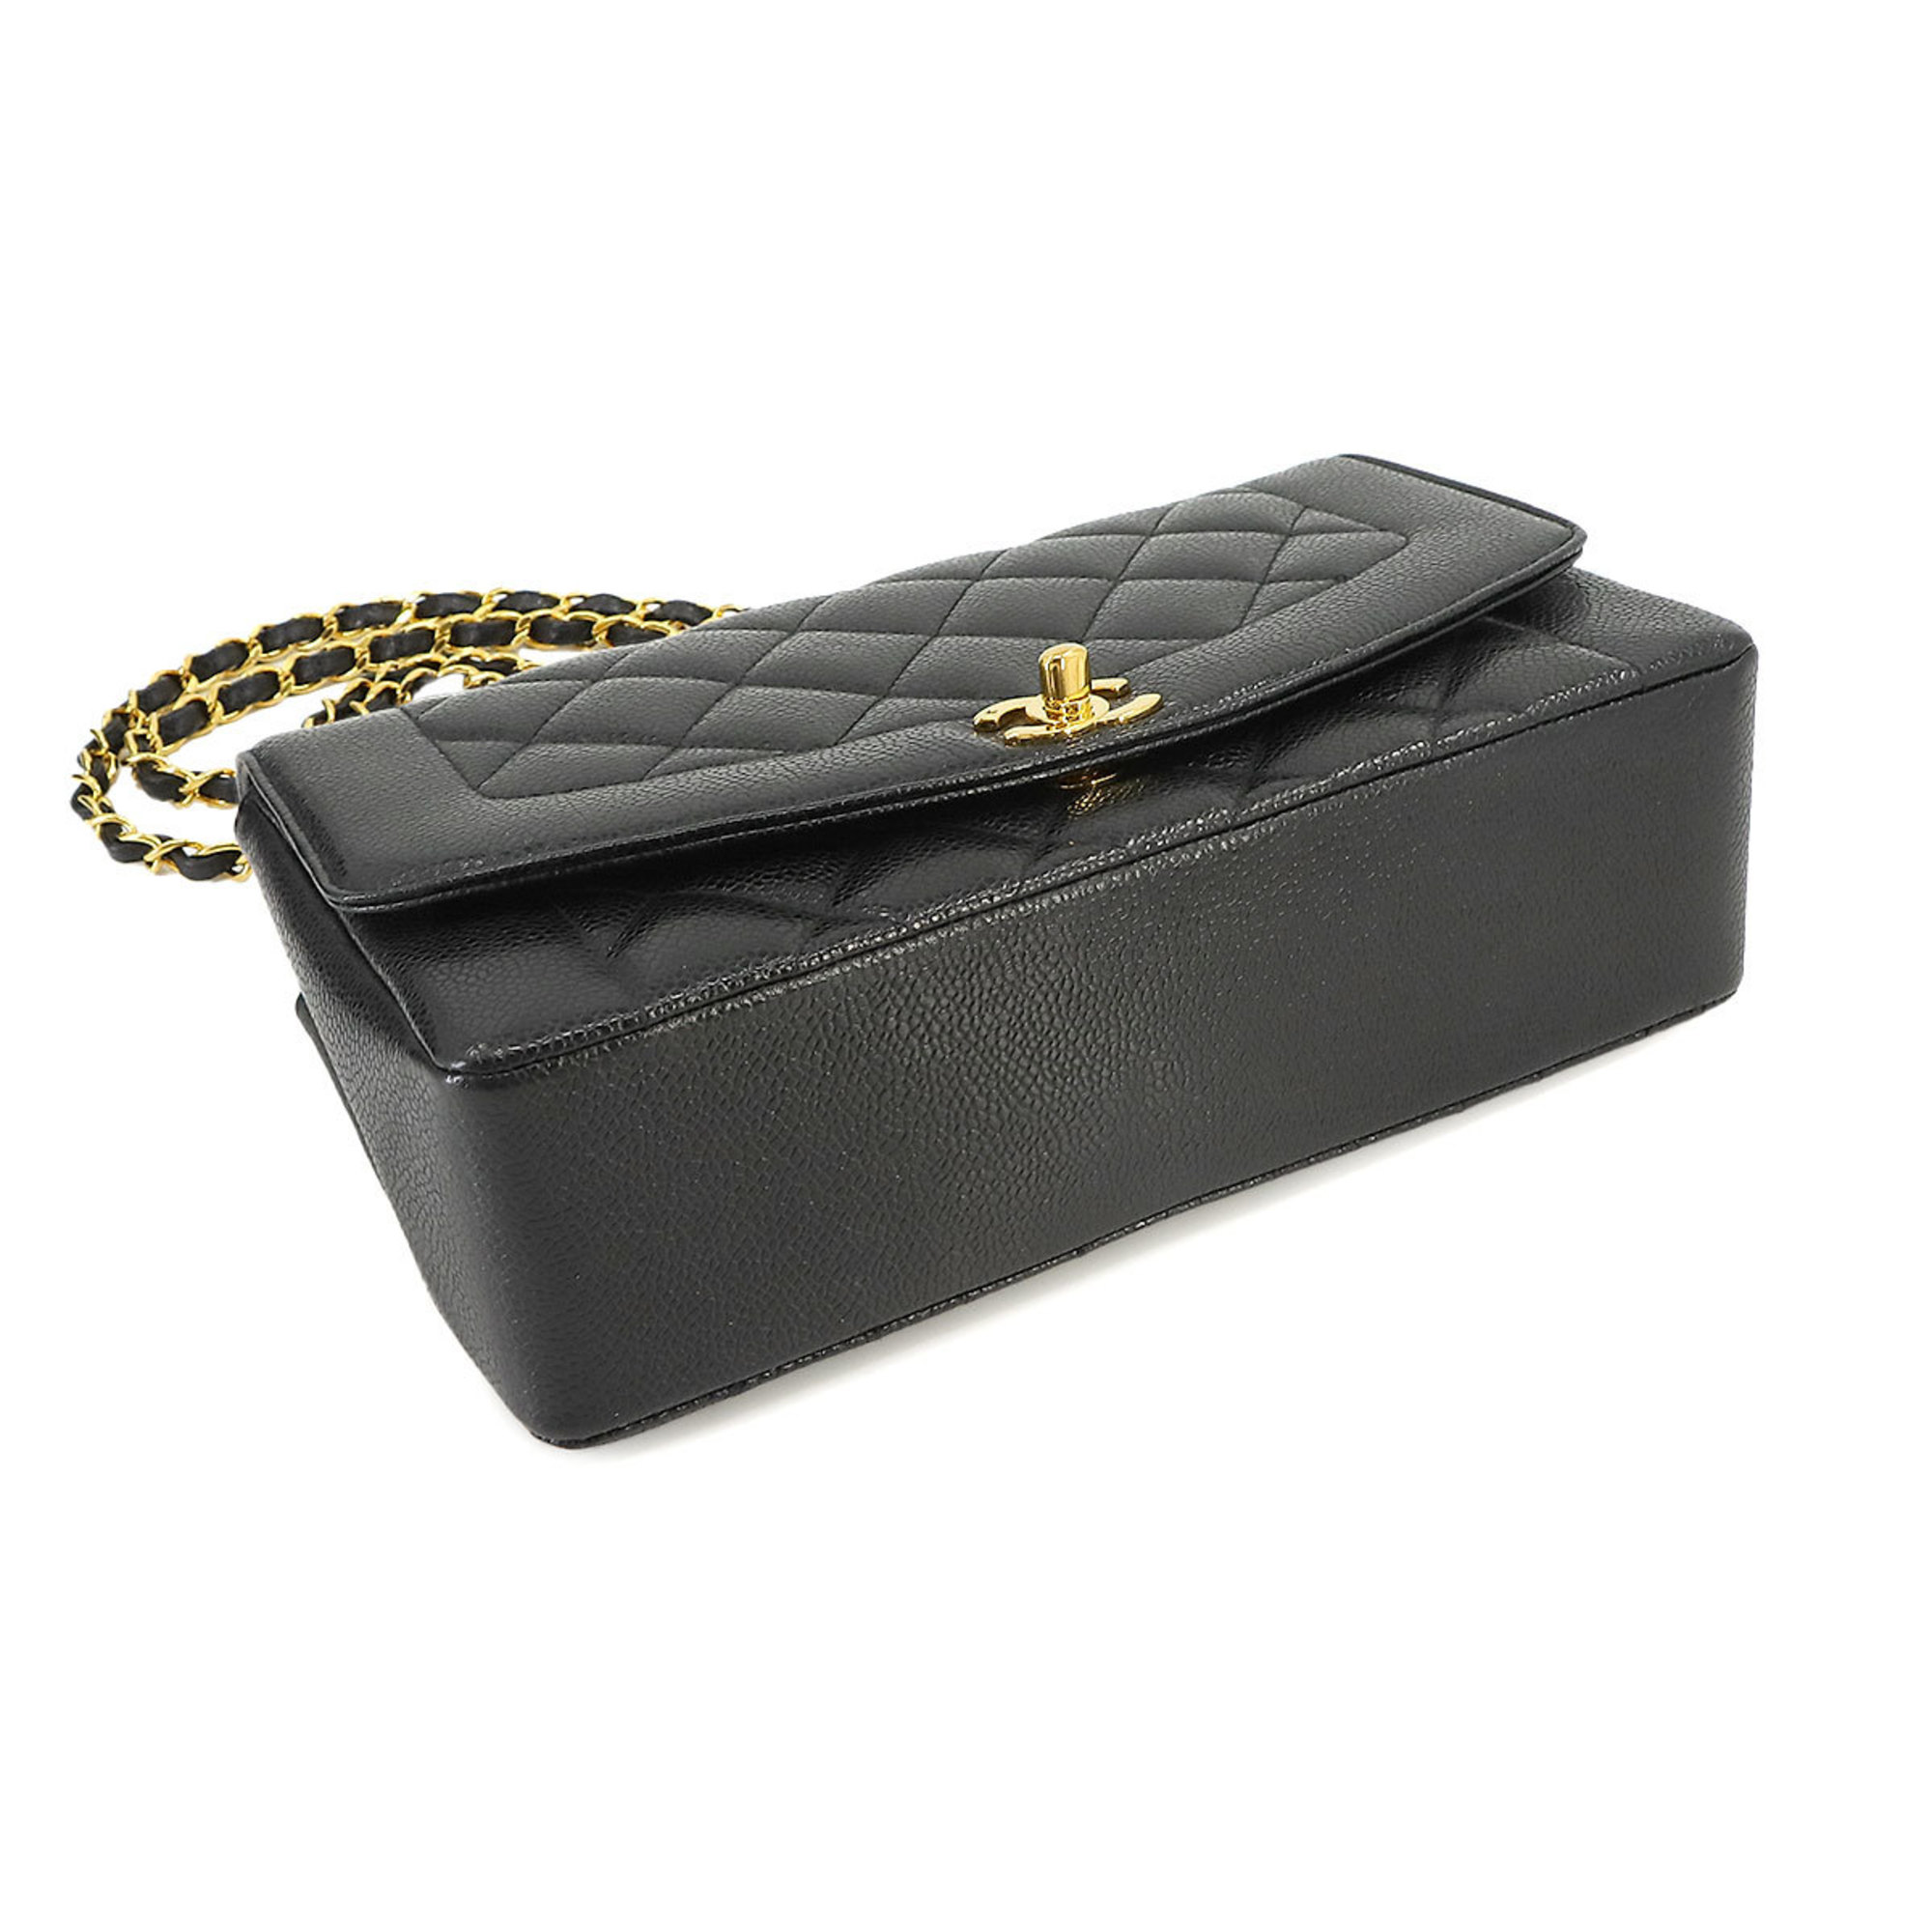 CHANEL Diana Matelasse 25 Chain Shoulder Bag Caviar Skin Black A01165